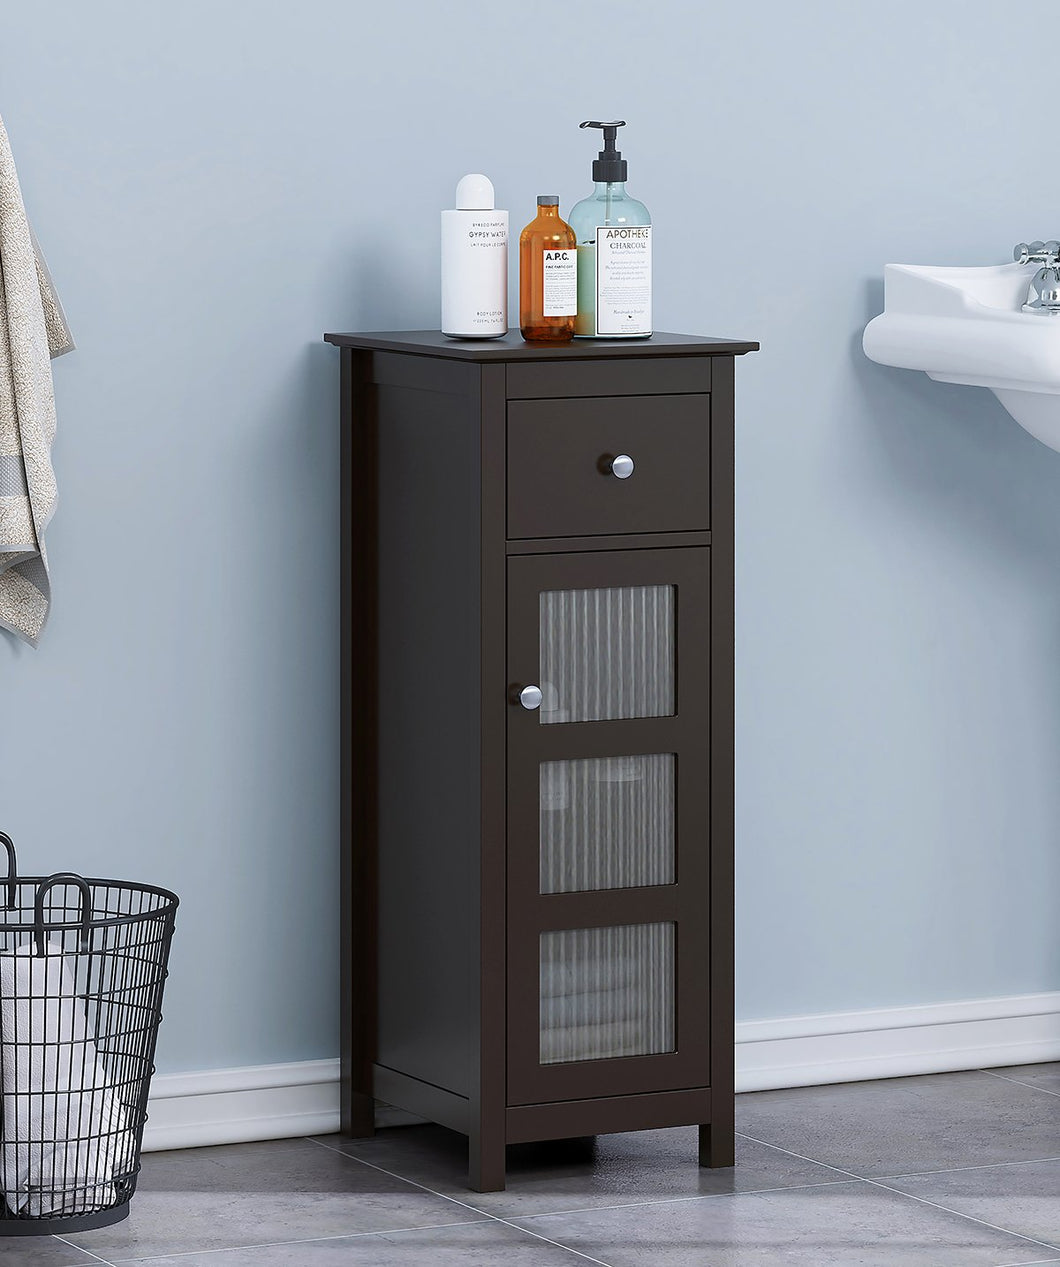 SPIRICH Bathroom Storage Floor Cabinet, Bathroom Cabinet free standing with Single Drawer and Adjustable Shelf (Espresso)